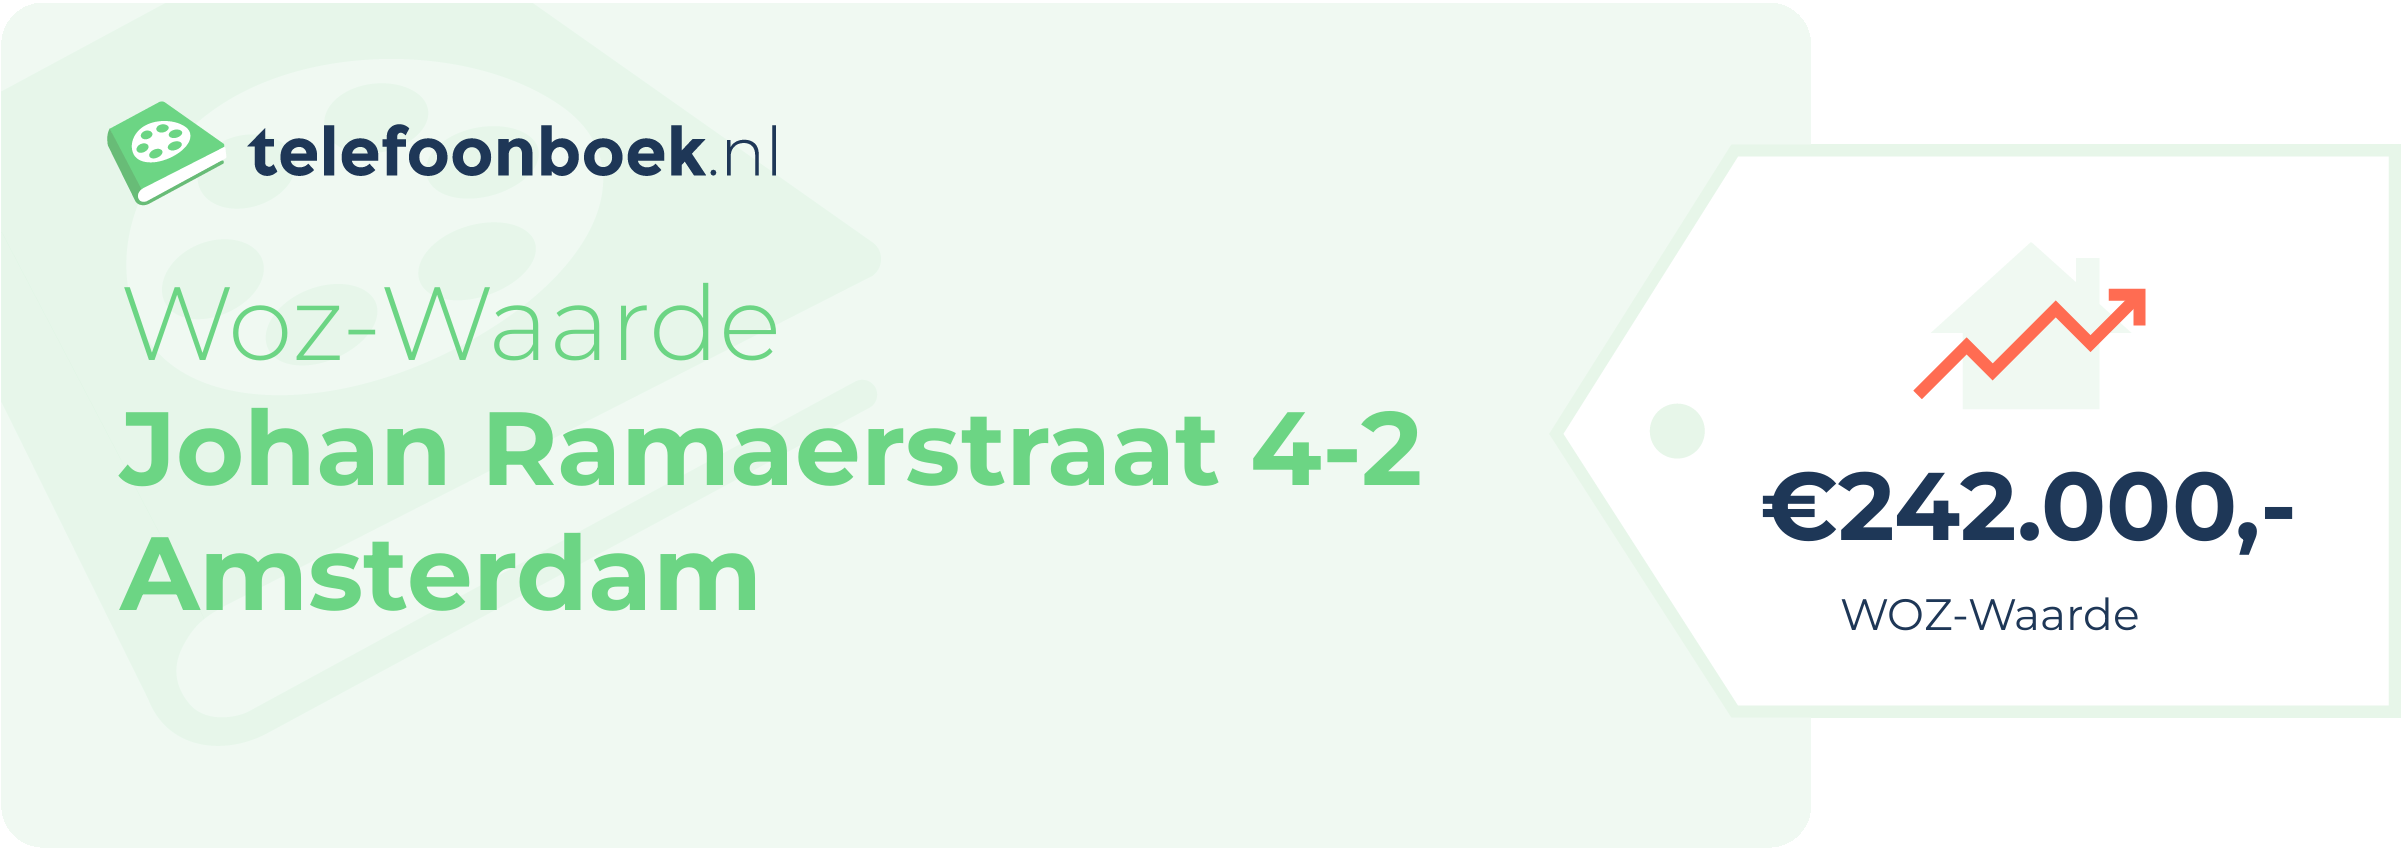 WOZ-waarde Johan Ramaerstraat 4-2 Amsterdam